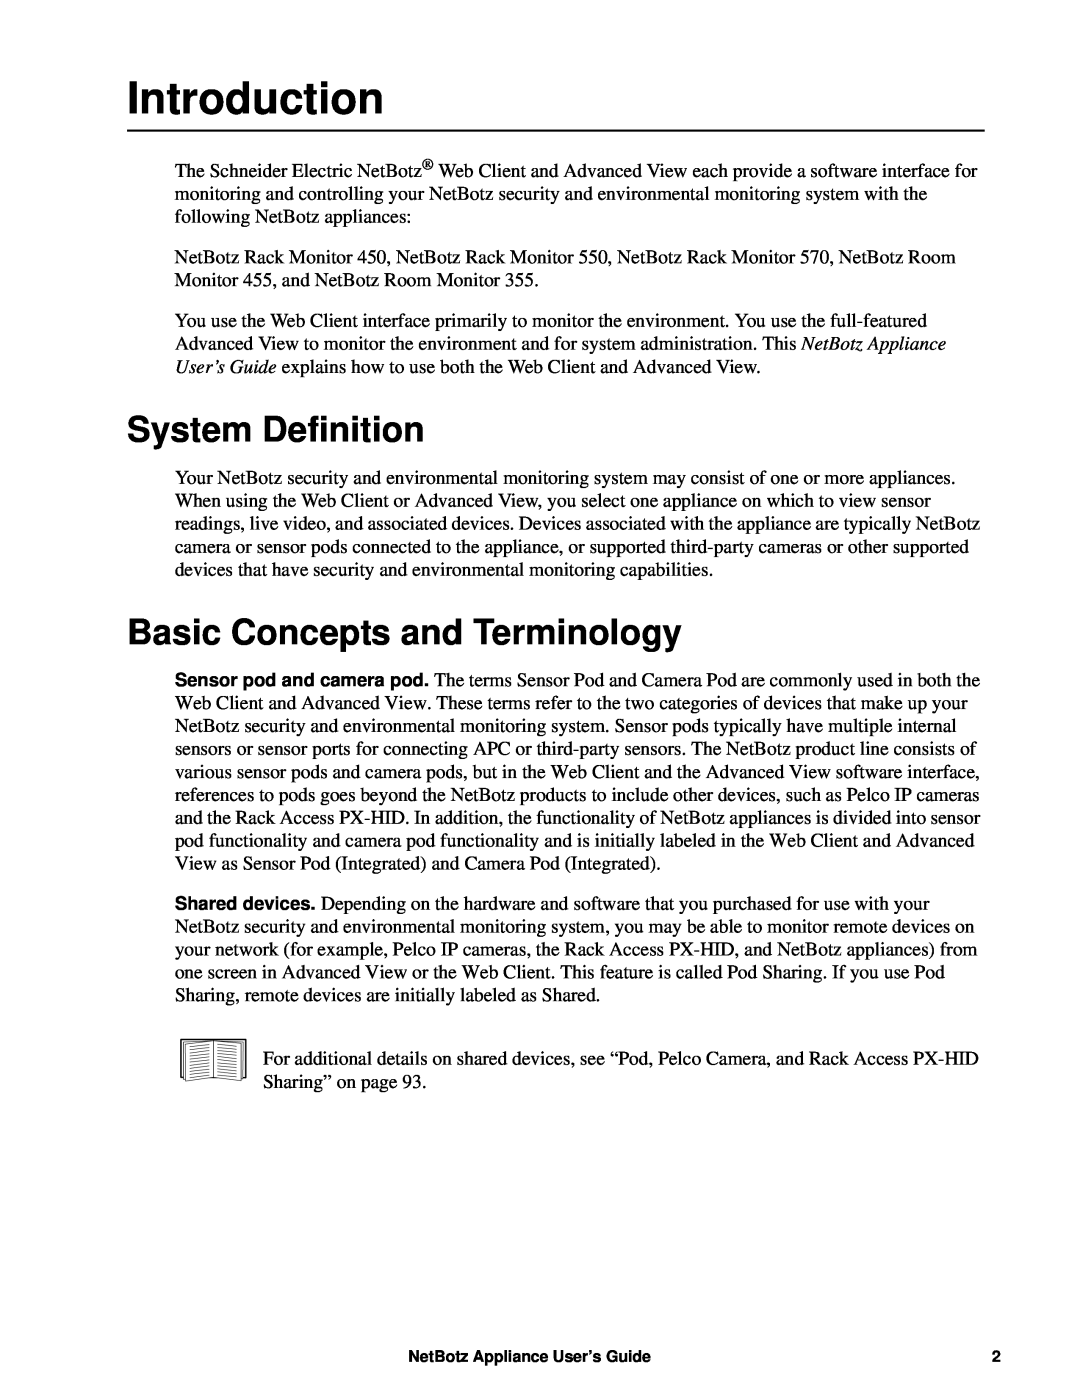 APC NBRK0550, NBRK0450, NBRK0570 manual Introduction, System Definition, Basic Concepts and Terminology 